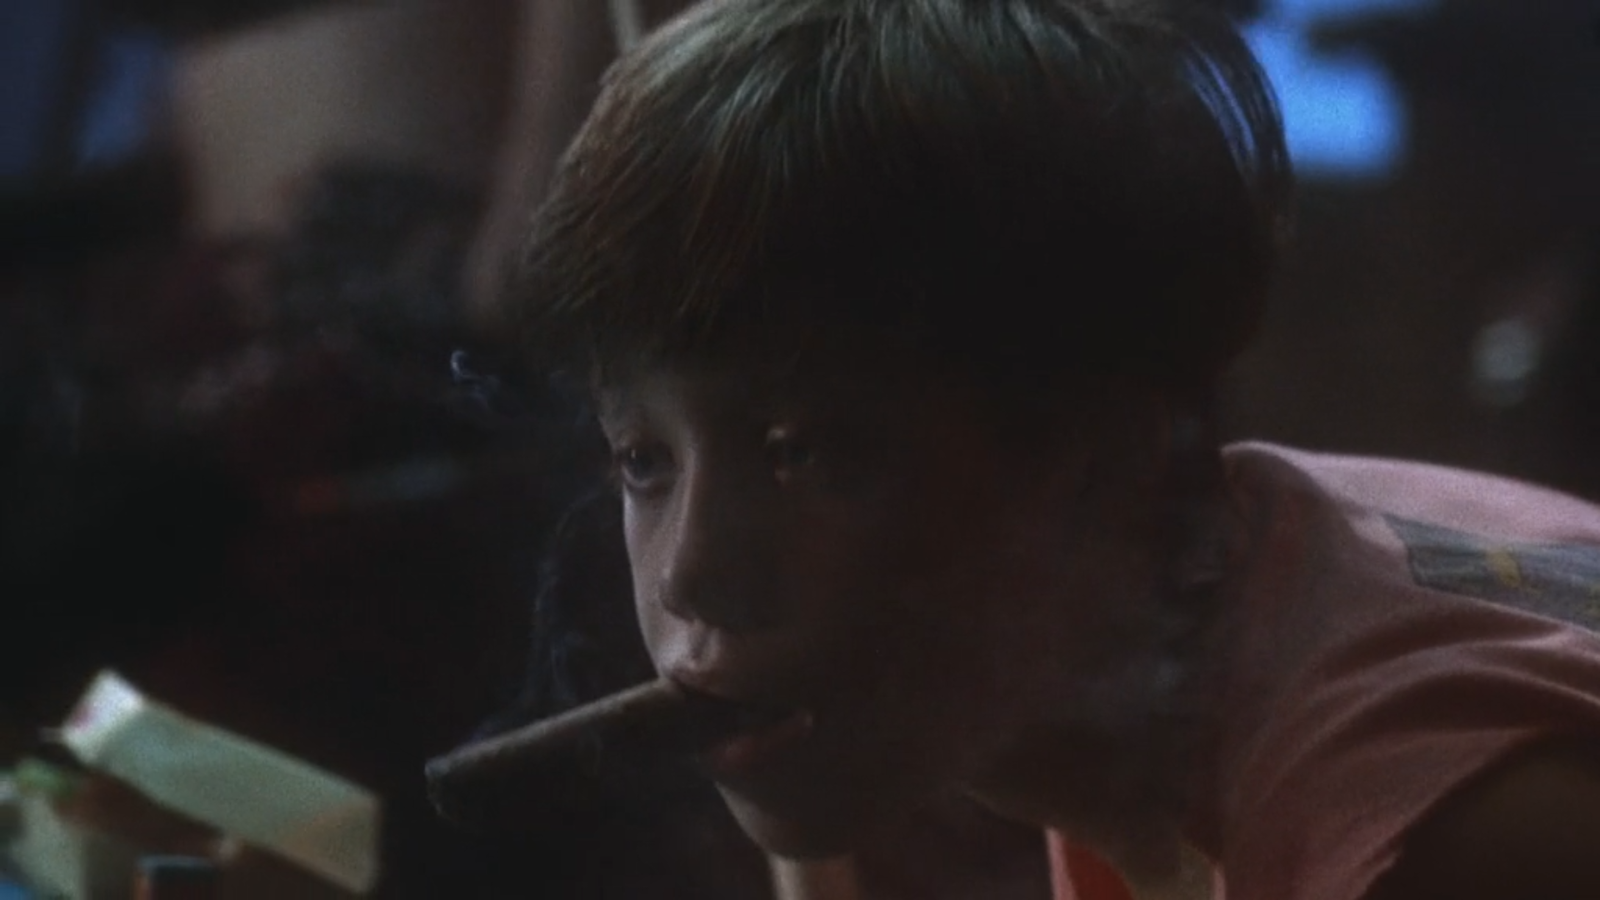 Revisiting childhood films - Teenage Mutant Ninja Turtles, Smoking, 1990